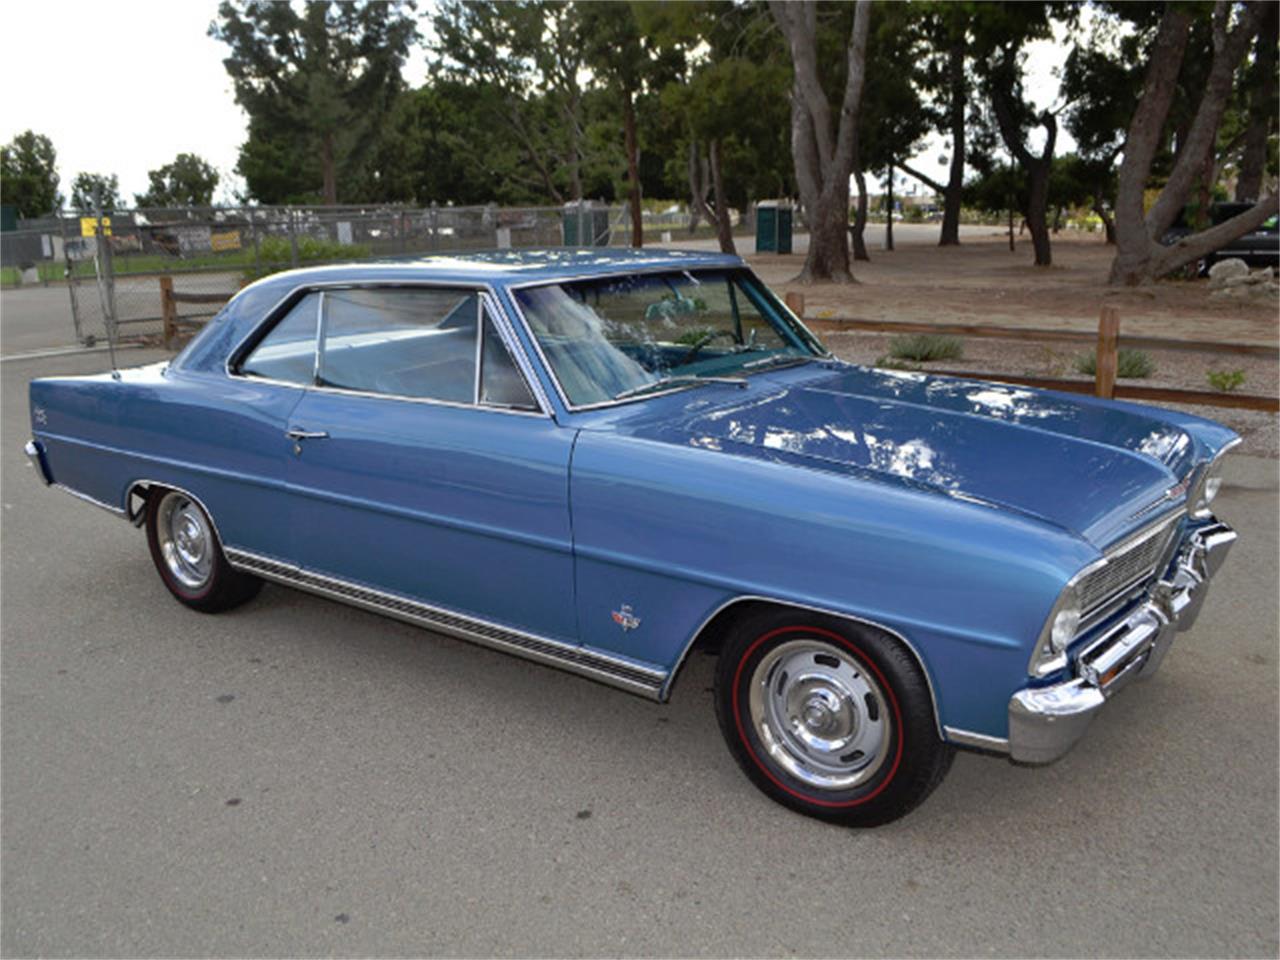 Blue 1966 Chevrolet Chevy II Nova for sale located in Anaheim, California -...